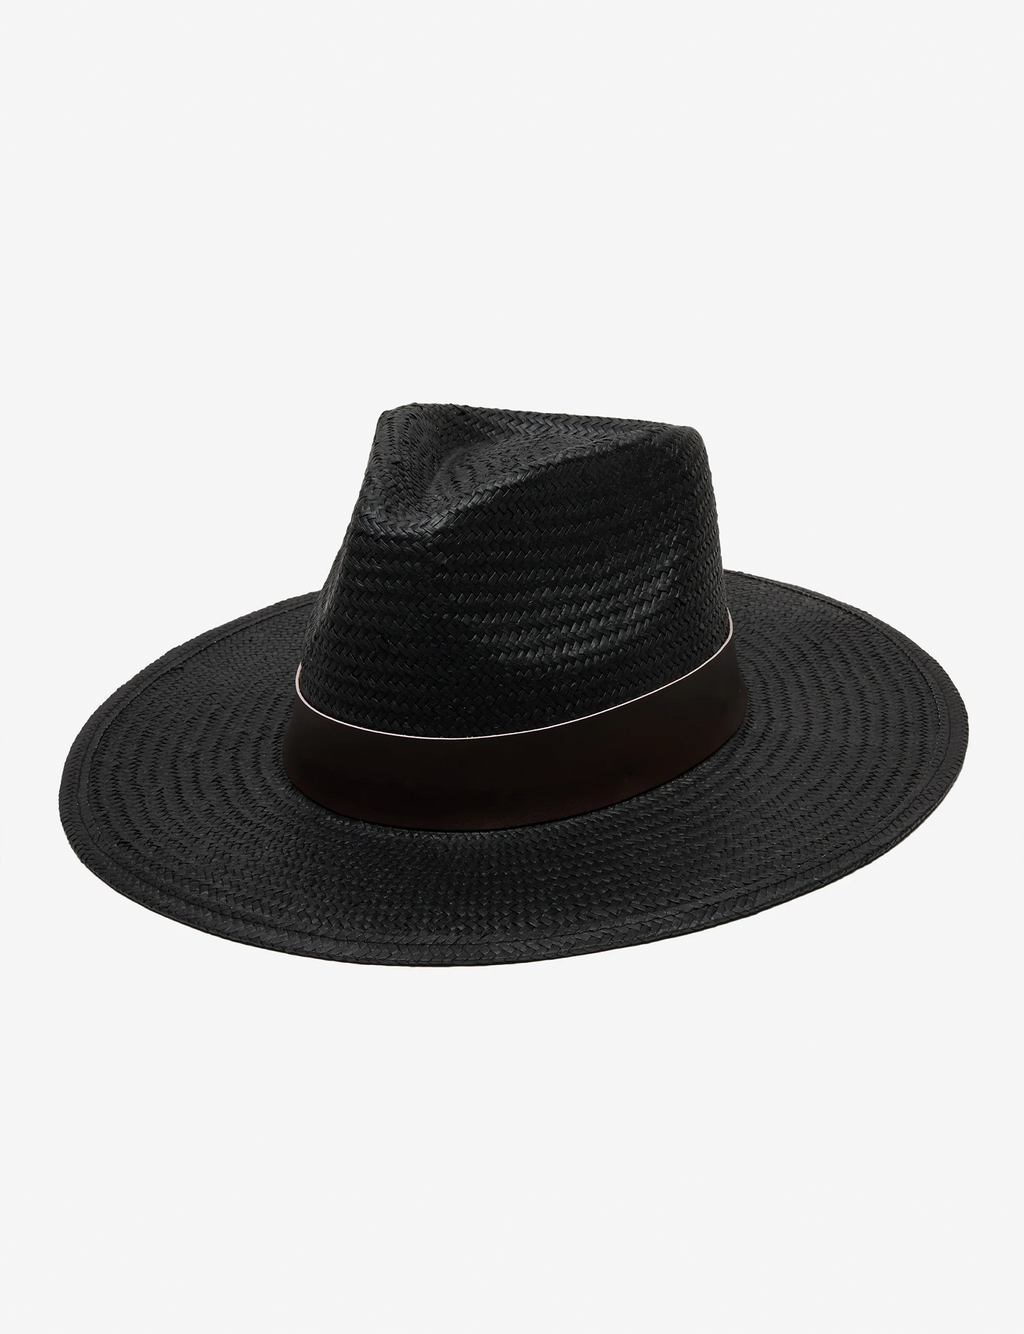 Slater Fedora Hat, Black